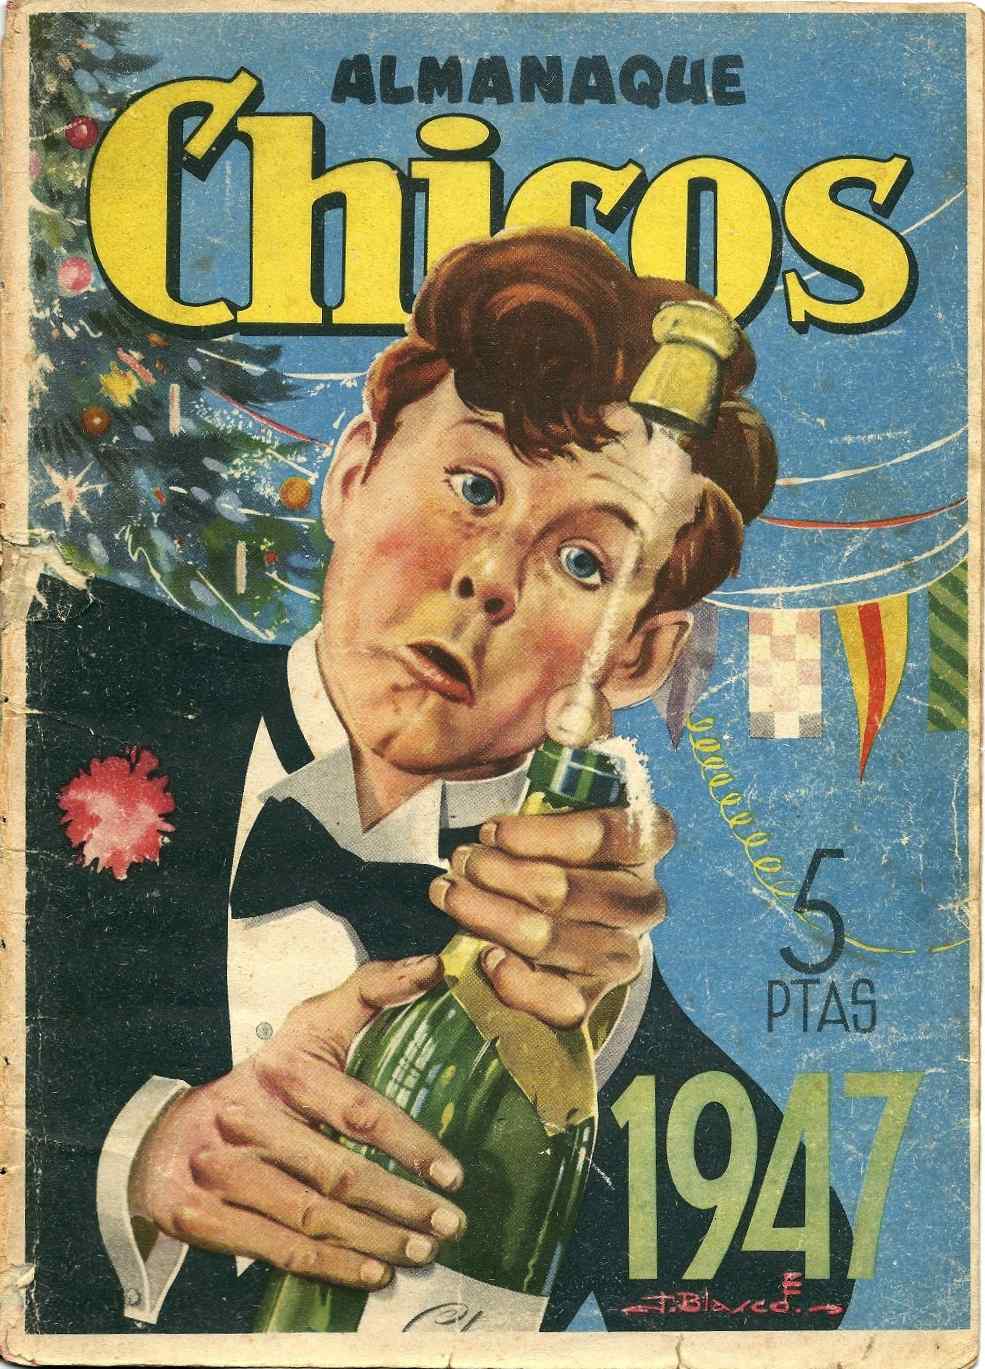 Comic Book Cover For Chicos - Almanaque para 1947